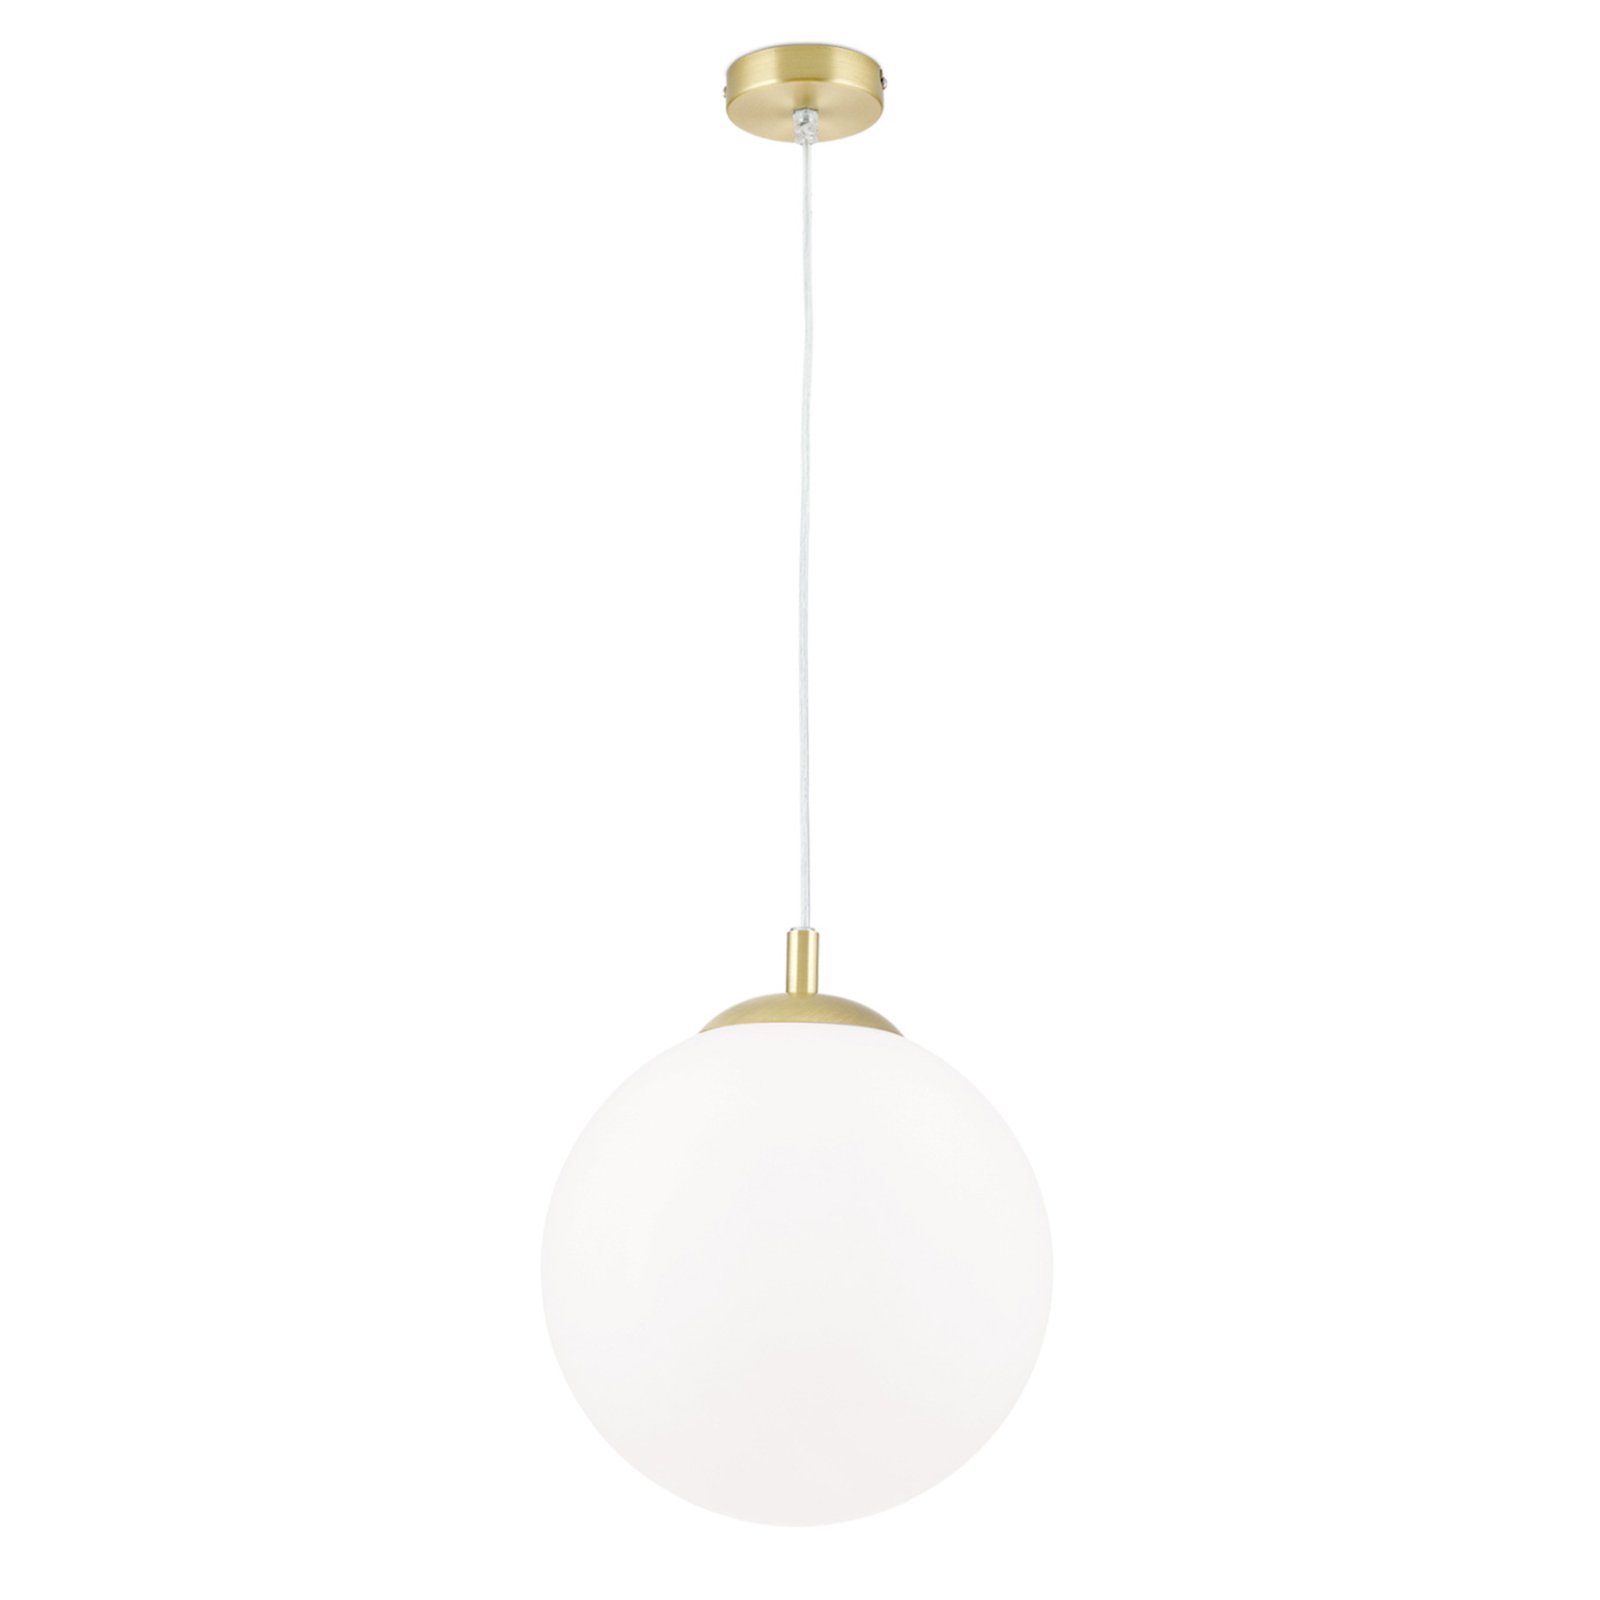 Madis hanging light in matt brass, one-bulb